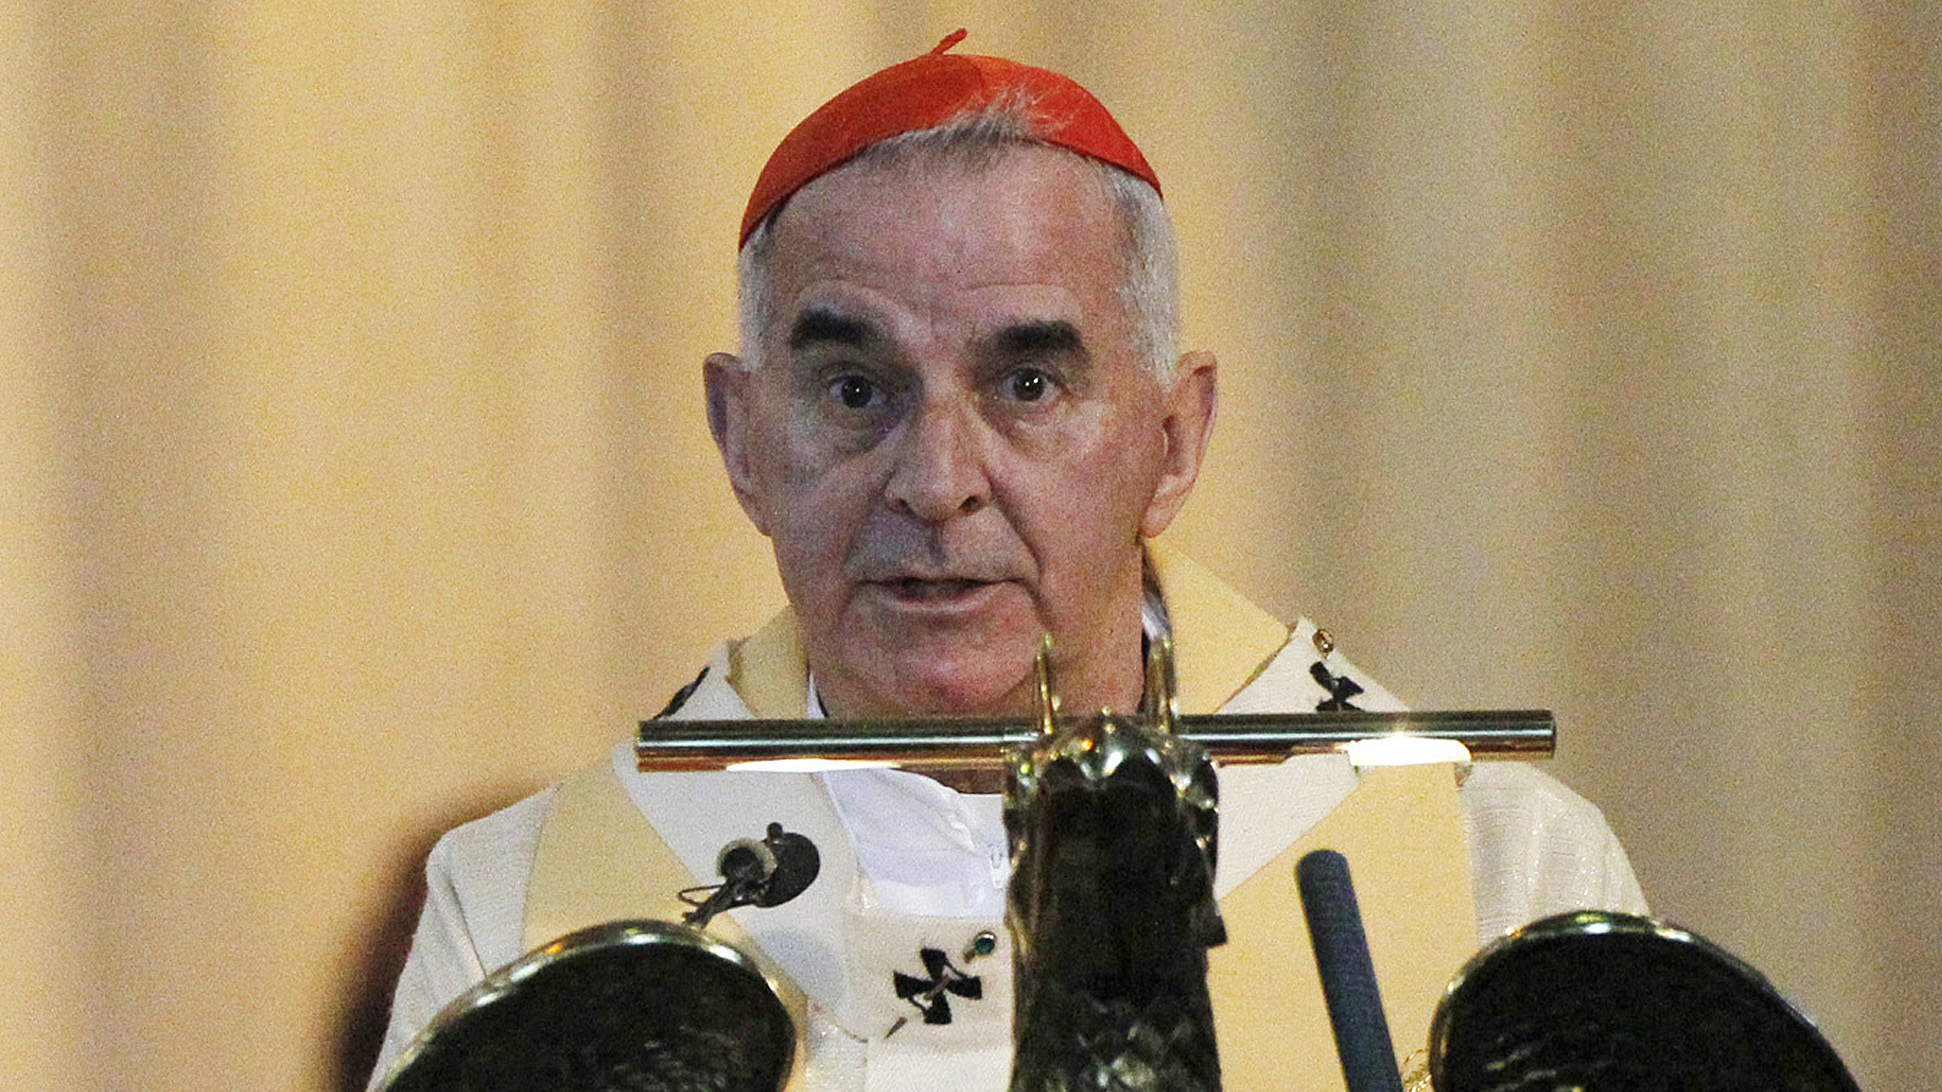 Cardinal O'Brien resigns (Image: Reuters)